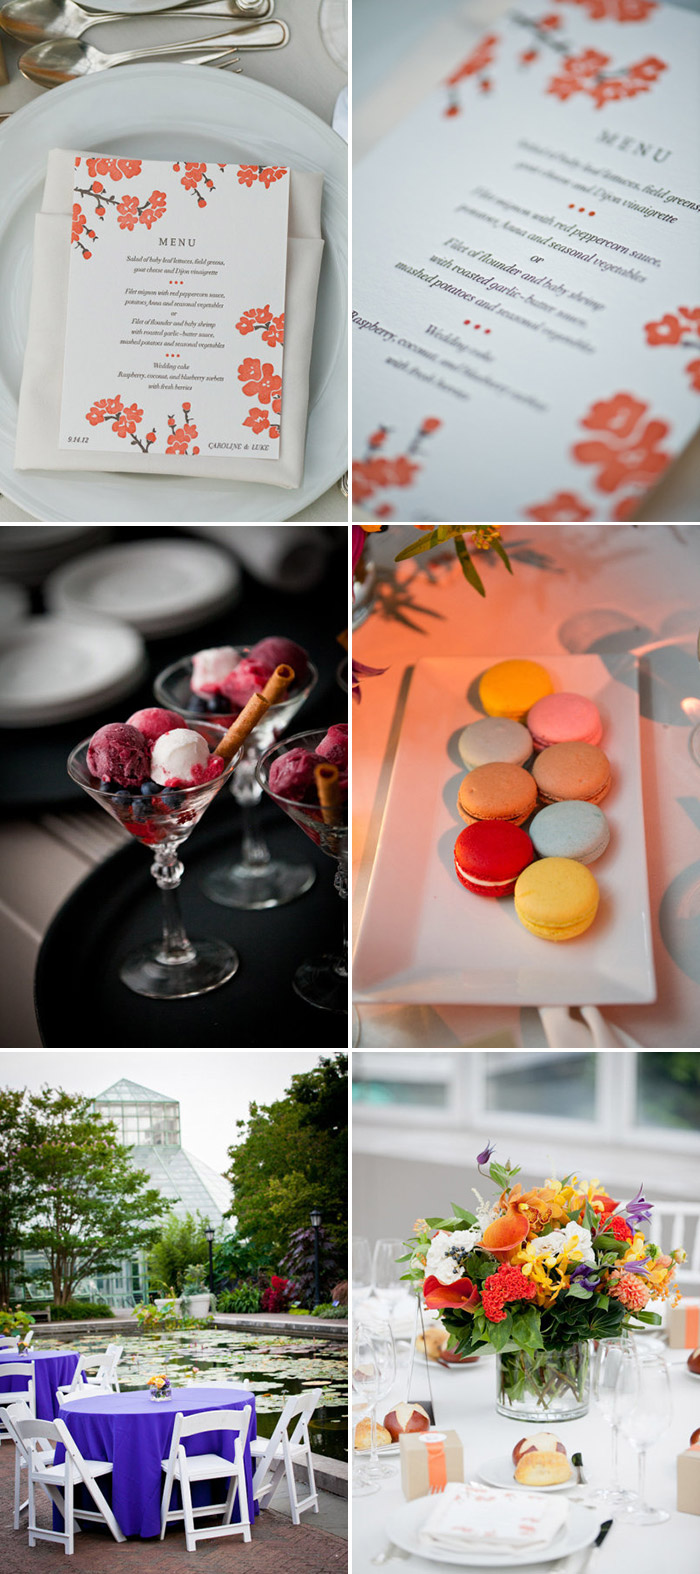 Bella Figura's Mimosa letterpress menus pair perfectly with the autumn wedding